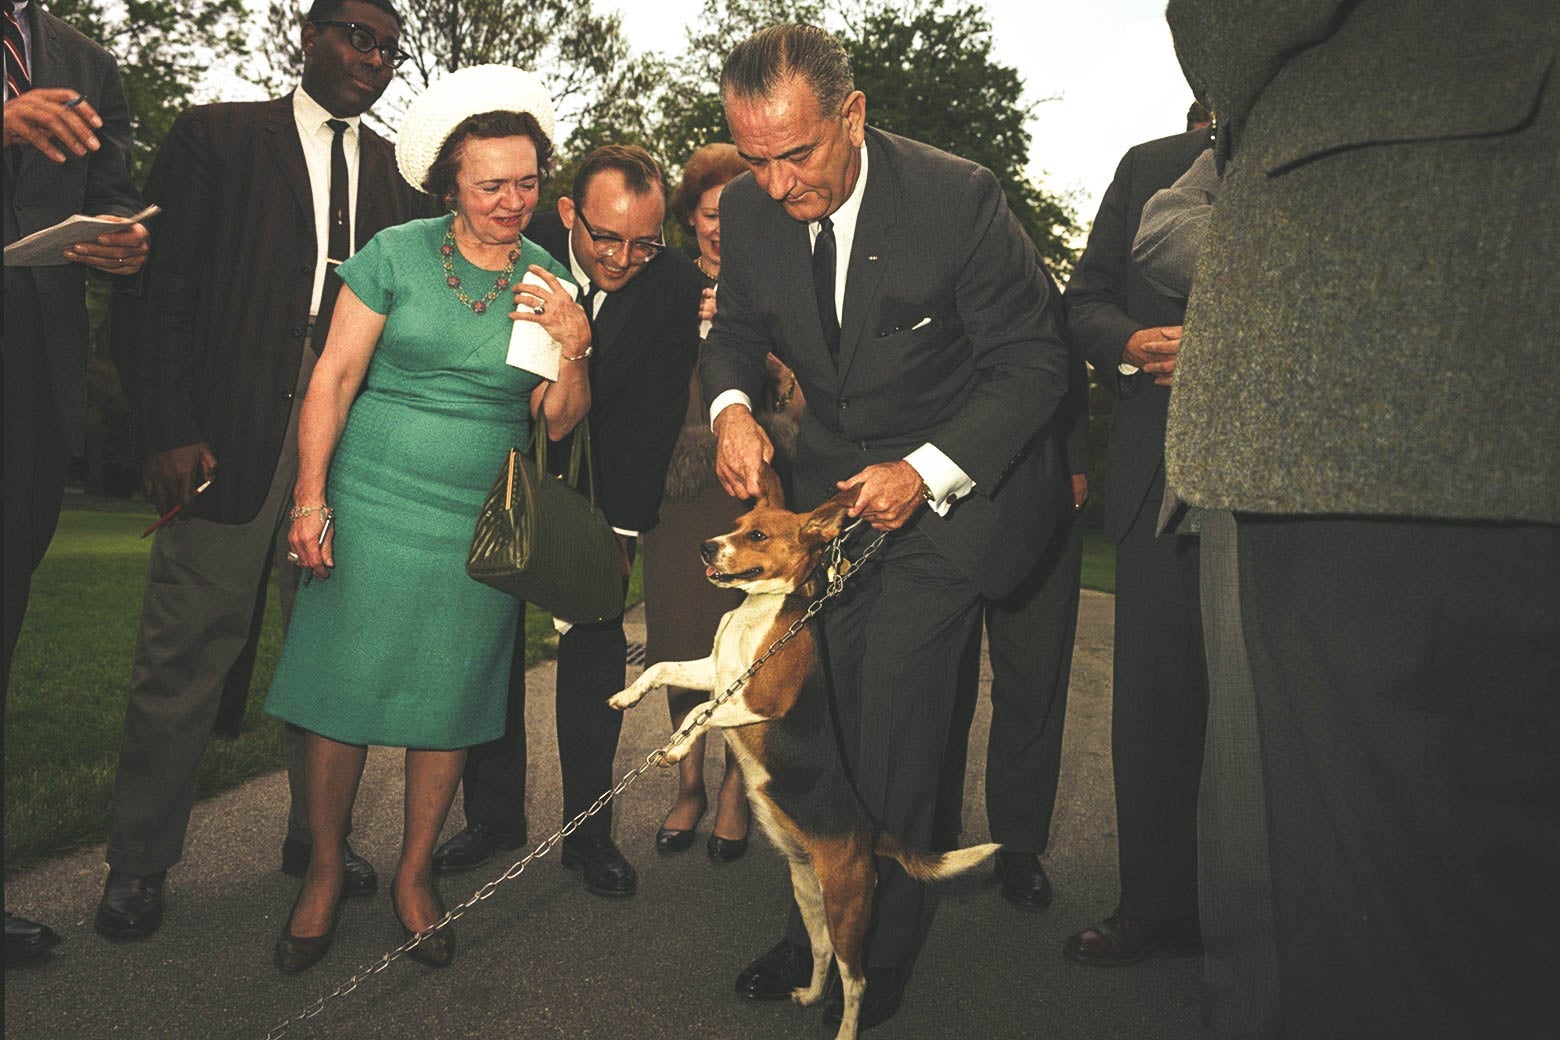 Lyndon Johnson lifting a dog, presumably Her, by the ears.